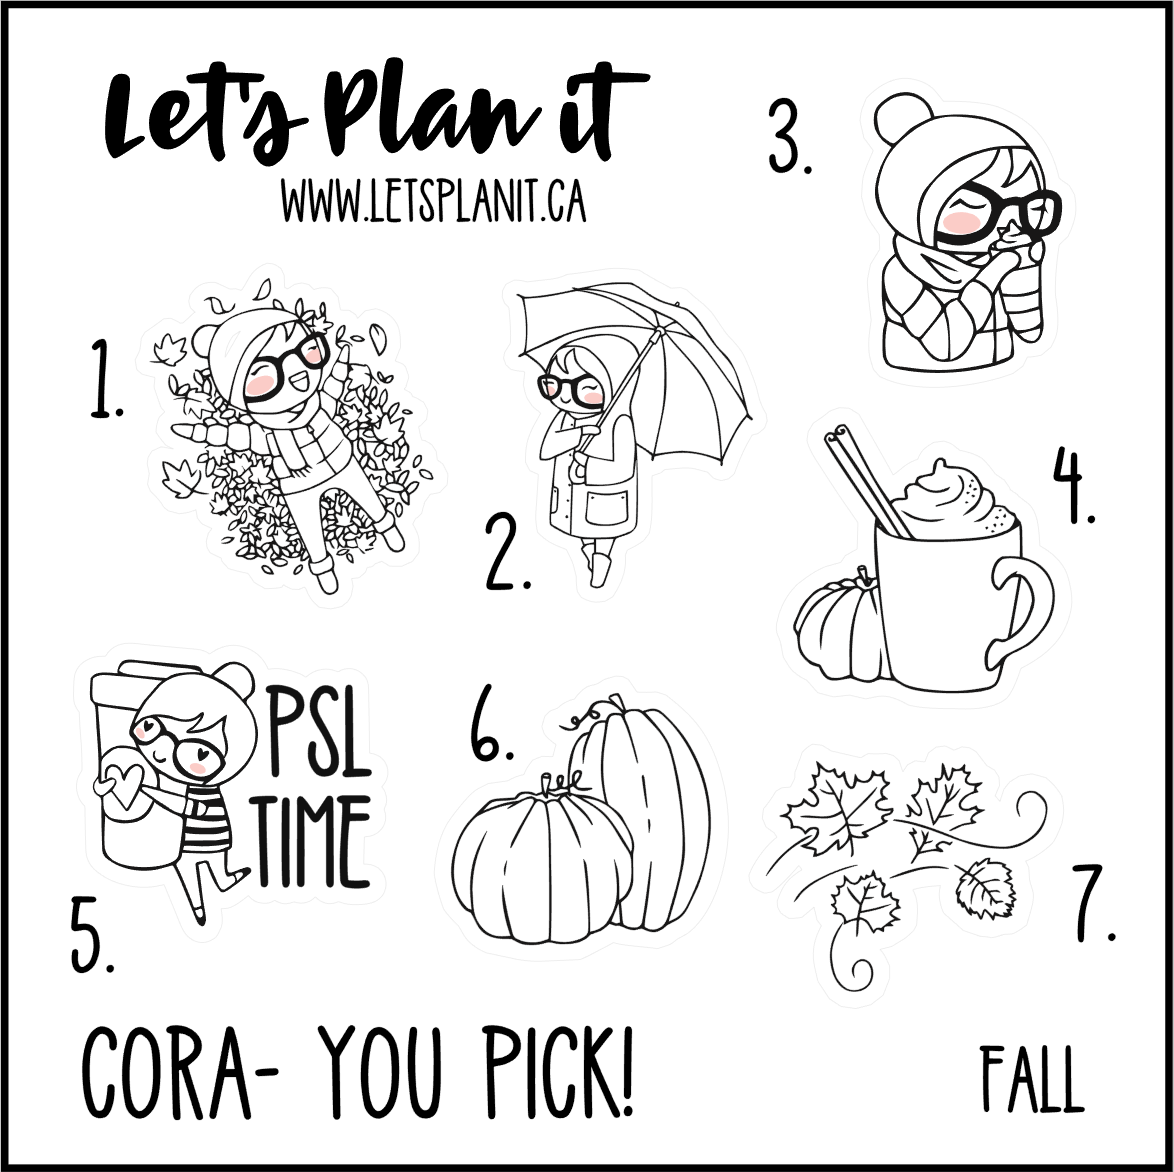 Cora-u-pick- Fall